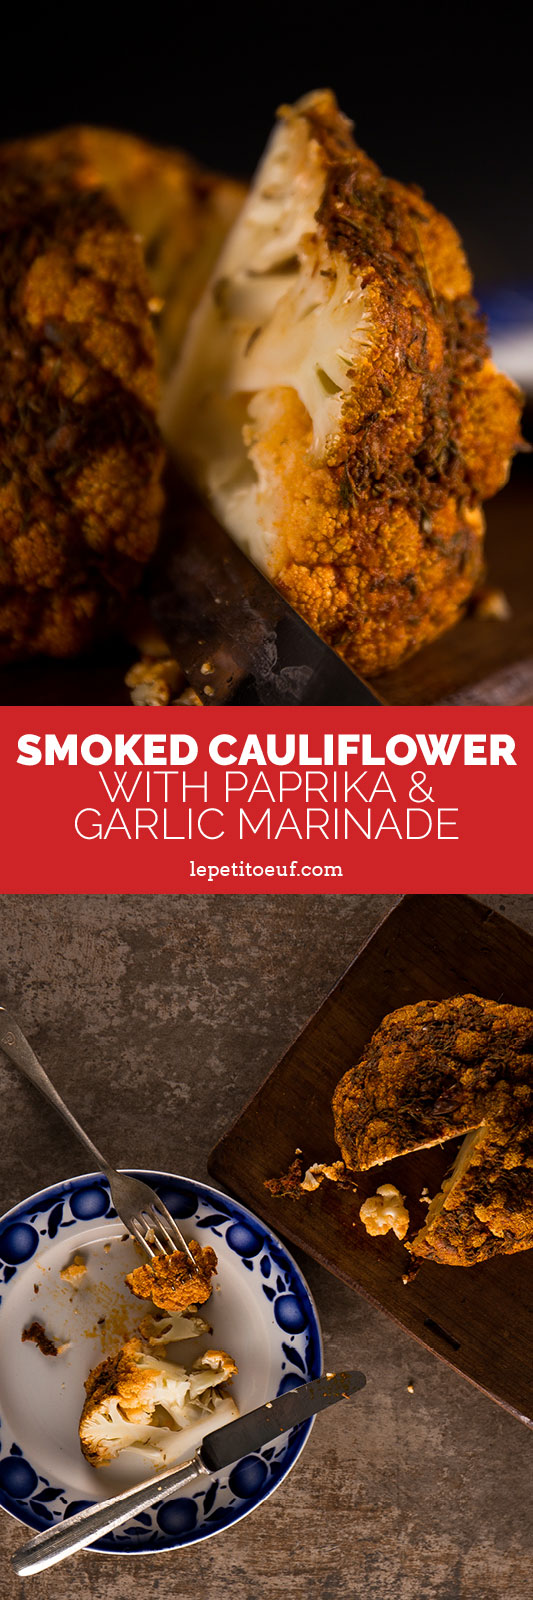 Smoked Cauliflower with Paprika Garlic Marinade - Brain Food Studio